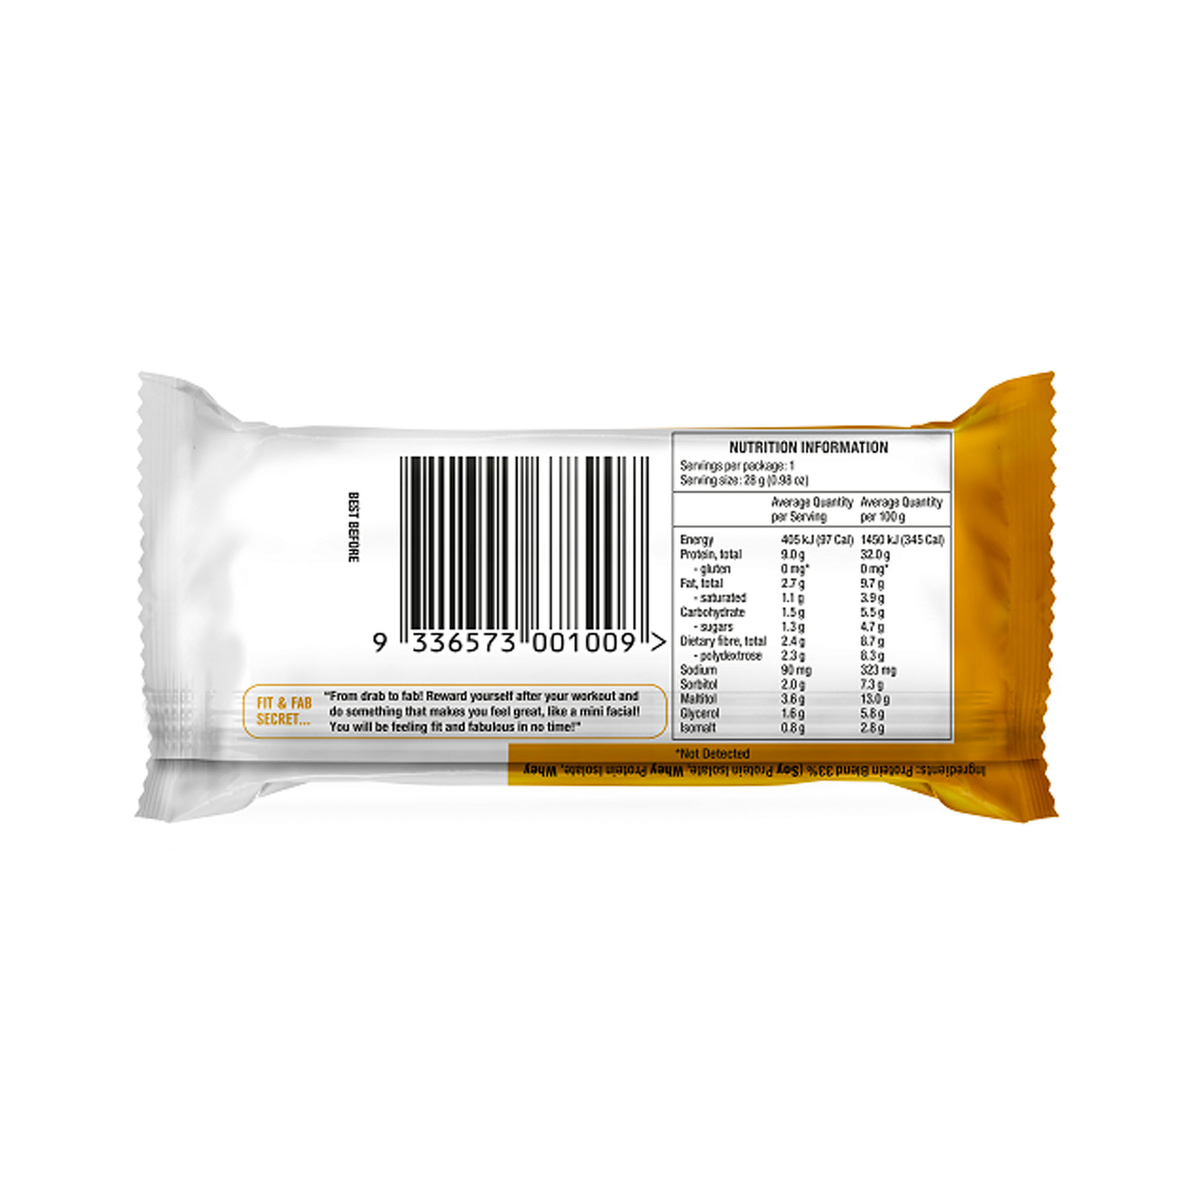 Slim Secrets Fit & Fab Mini Protein Bar Creme Caramel 28g